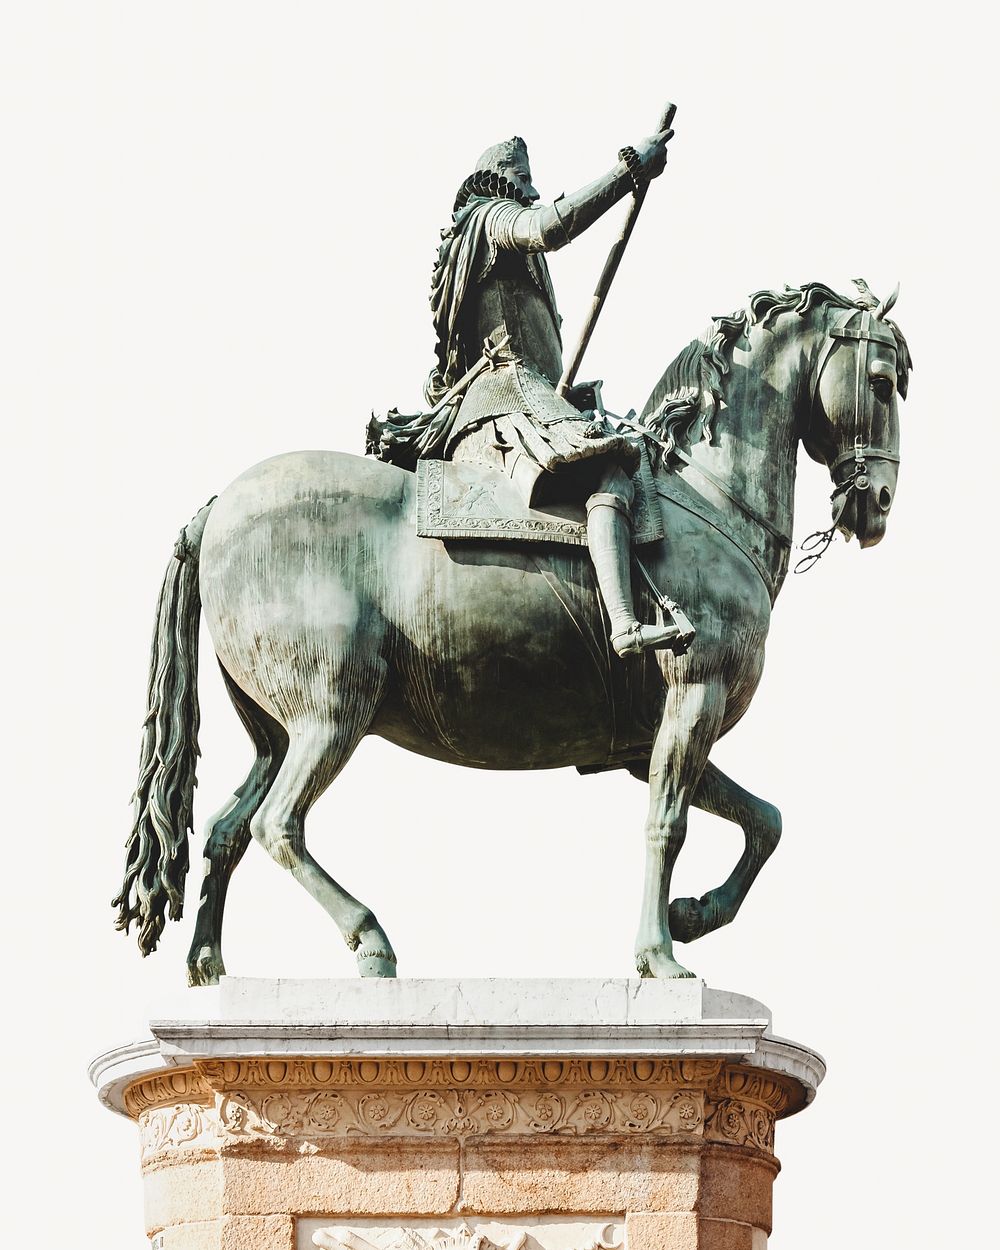 Spanish king statue in Plaza Mayor